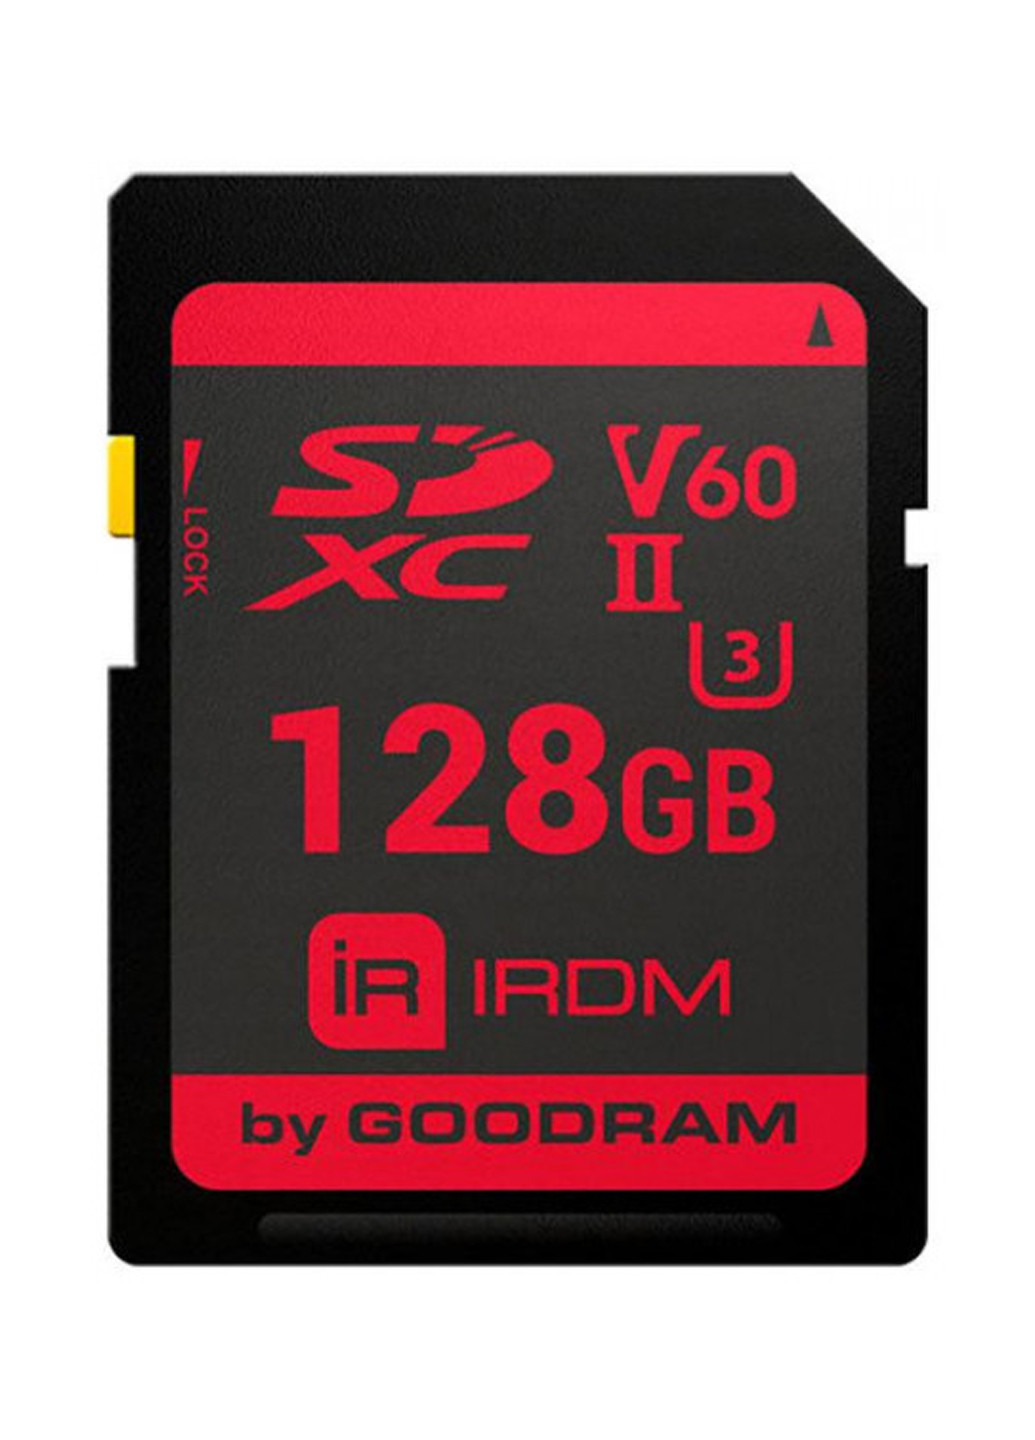 Карта памяти Secure Digital 128Gb IRDM SDXC V60 UHS-II U3 Retail (IR-S6B0-1280R11) Goodram карта памяти goodram secure digital 128gb irdm sdxc v60 uhs-ii u3 retail (ir-s6b0-1280r11) (138914847)